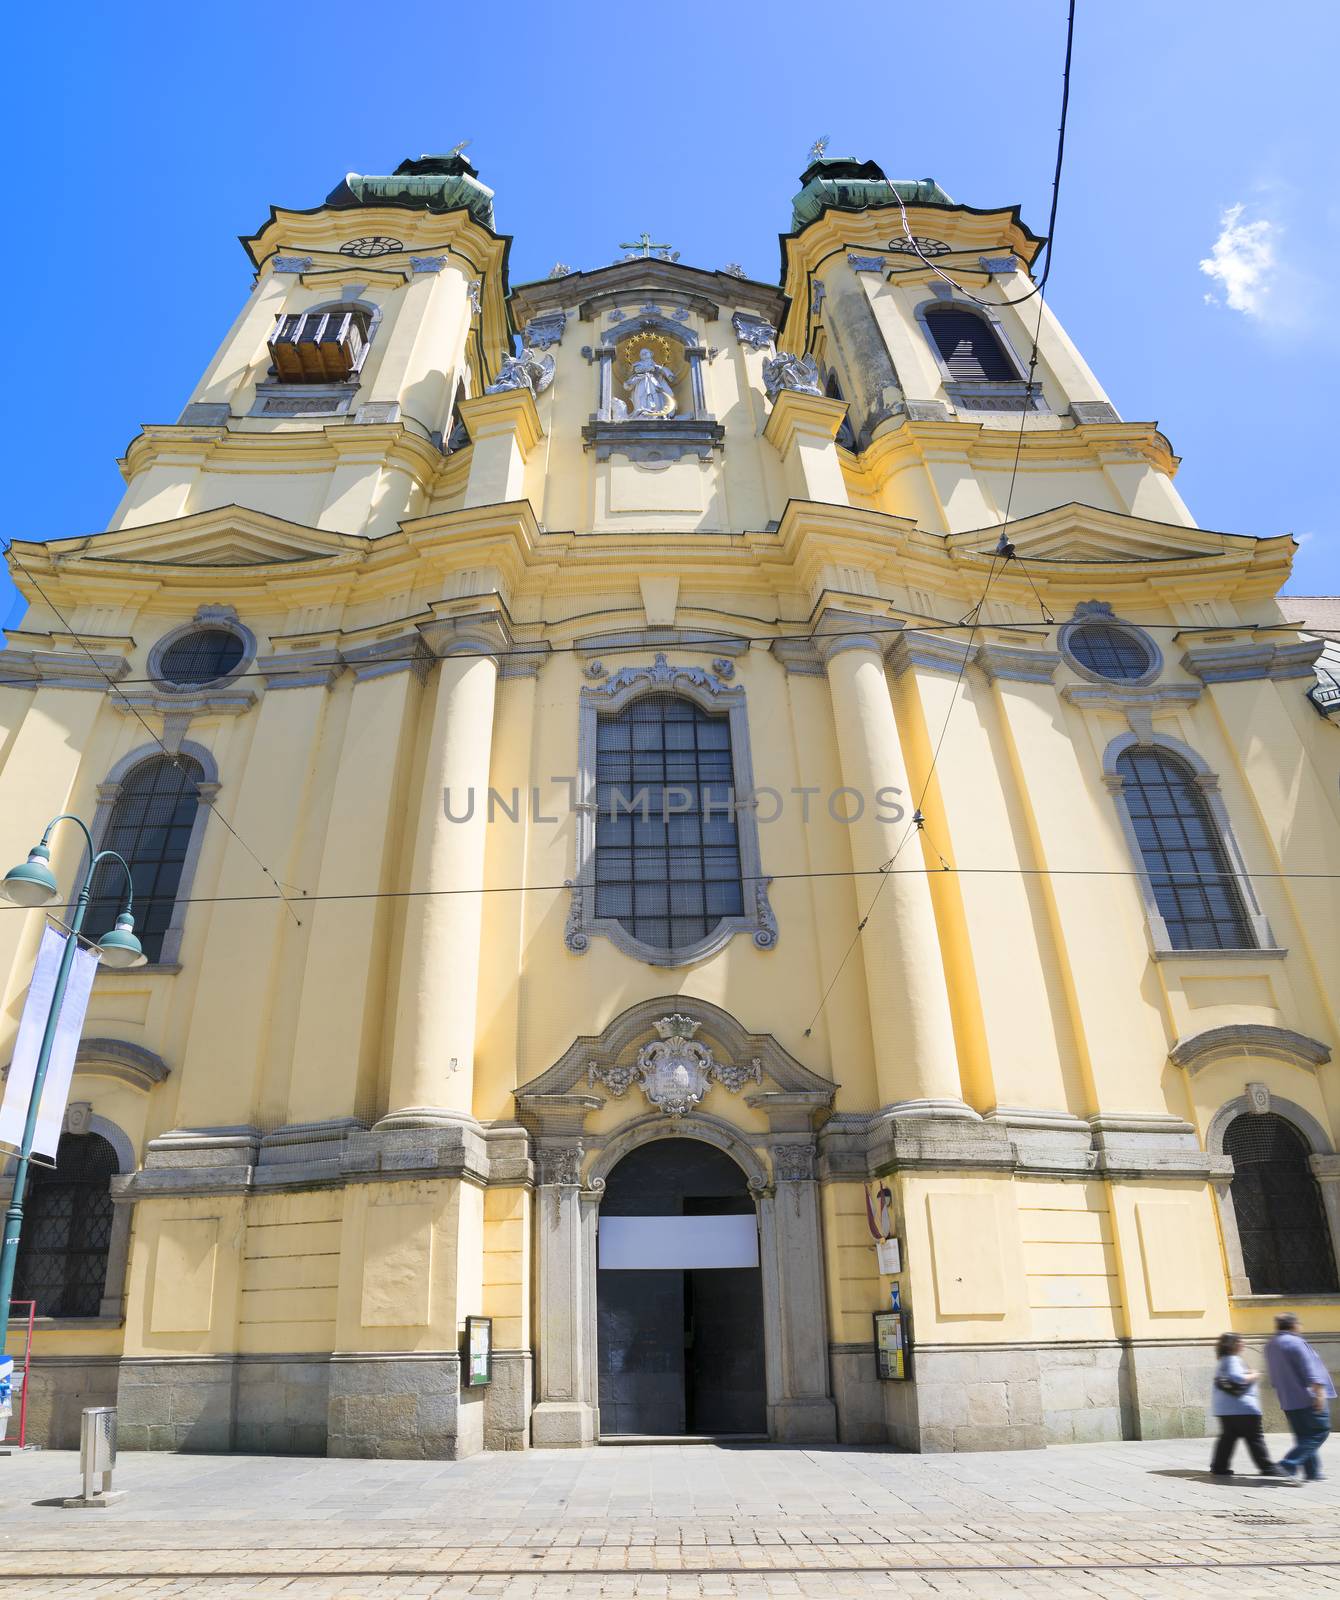 Image of Ursuline Church in Linz, Austria